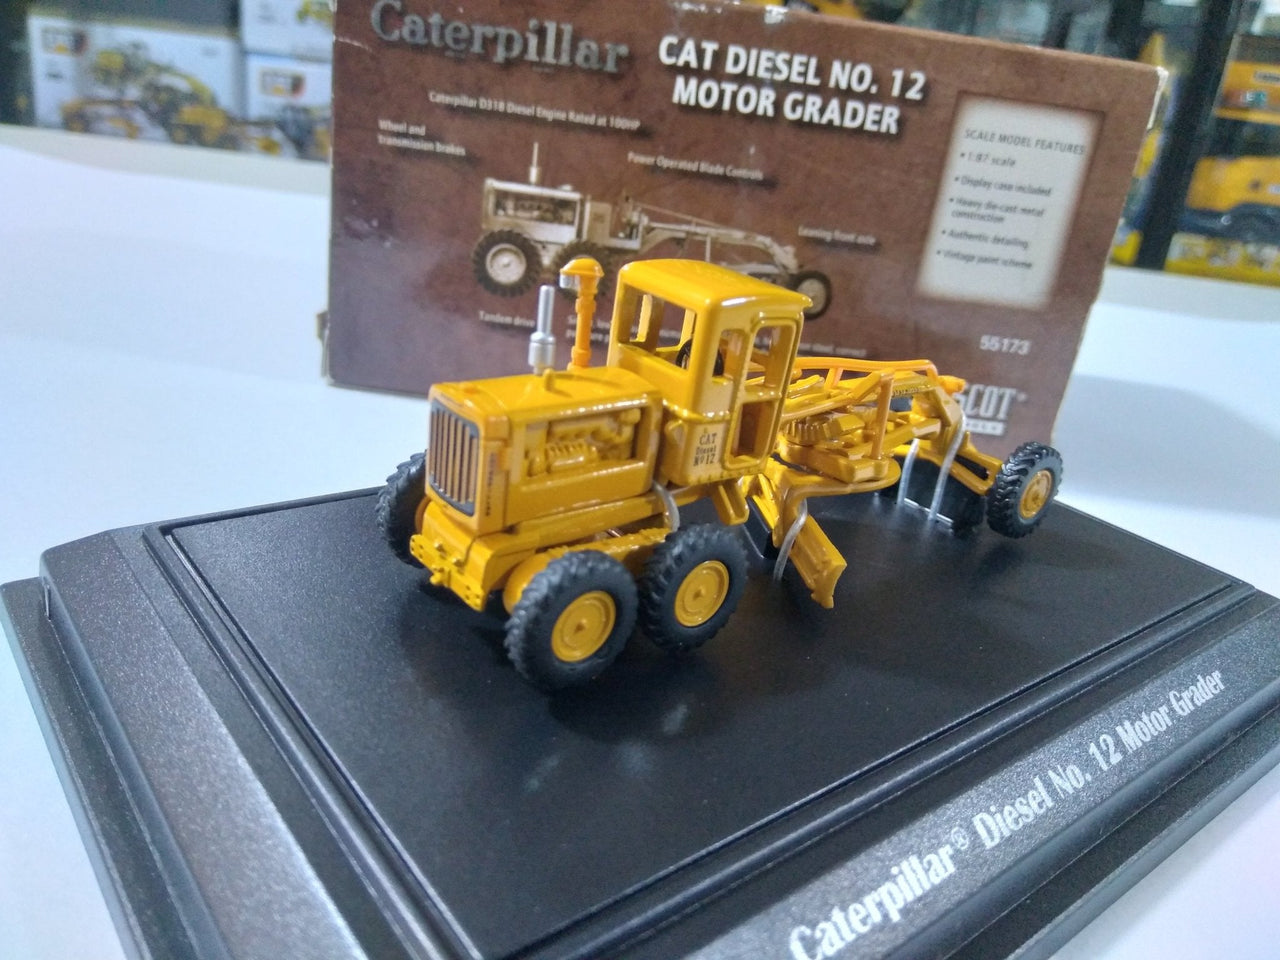 55173-LQ Caterpillar Diesel Motor Grader 12 Scale 1:87